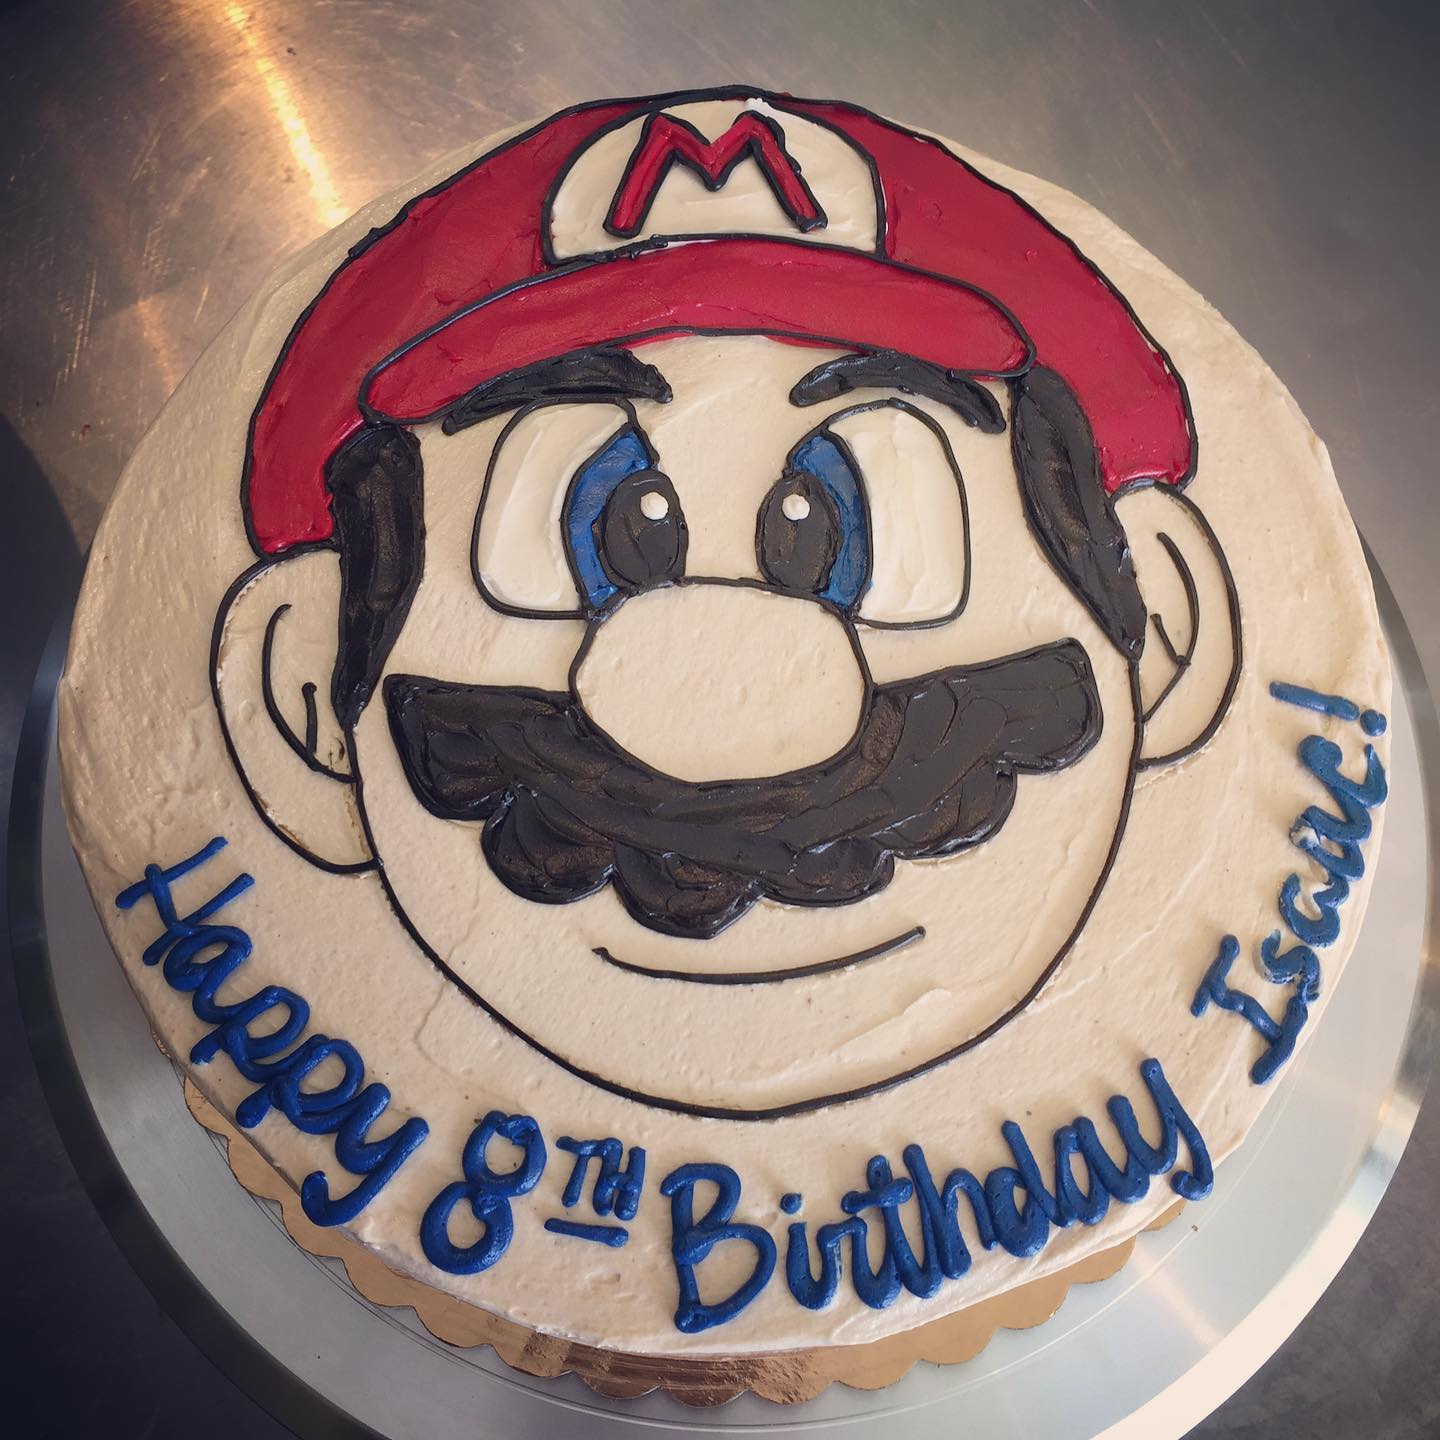 Super Mario cake for birthday. Yummy!